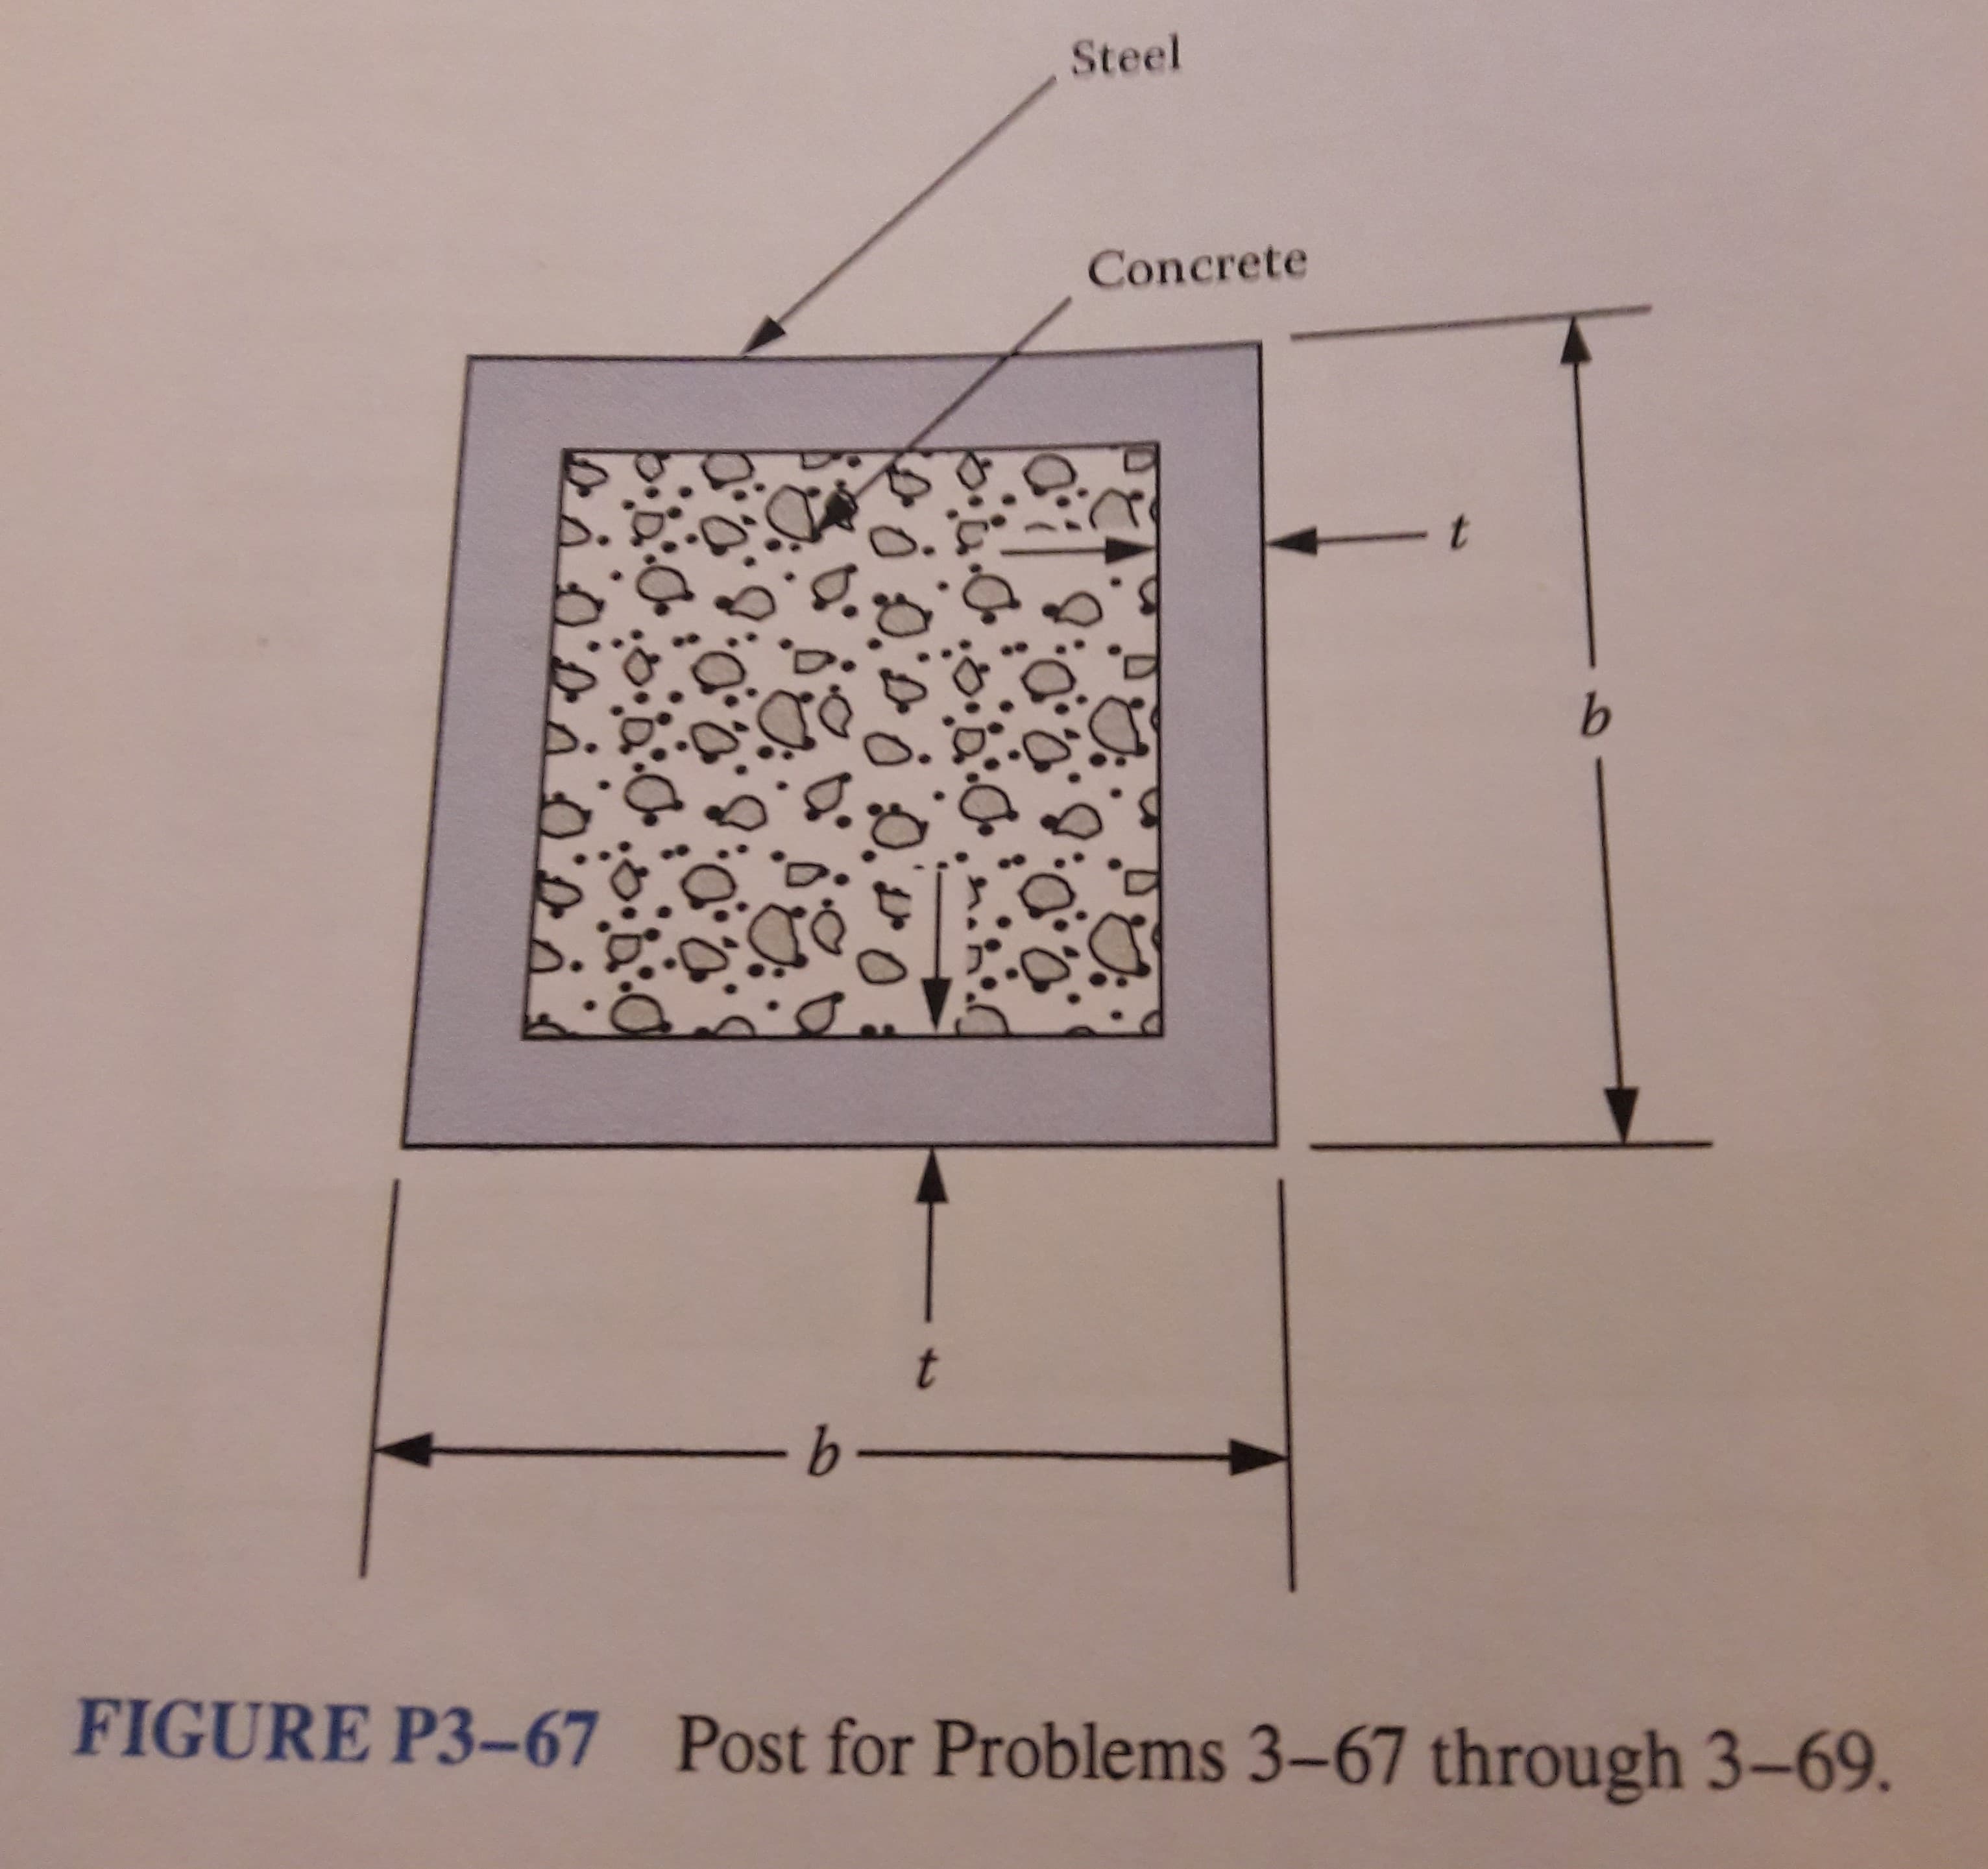 Steel
Concrete
t
9-
FIGURE P3-67
Post for Problems 3-67 through 3-69.
